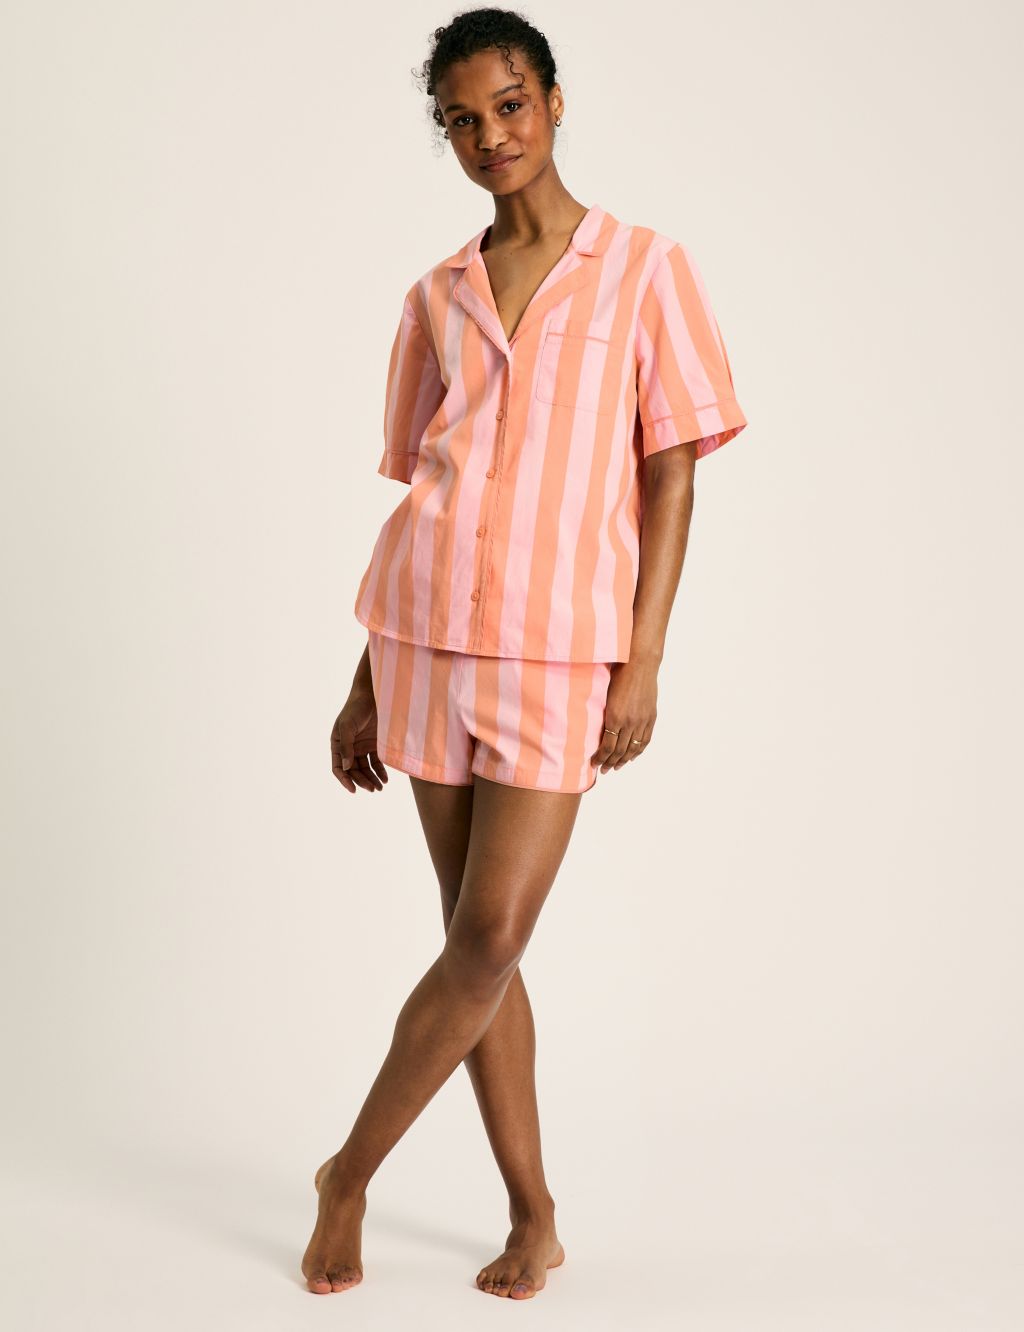 Pure Cotton Striped Pyjama Set